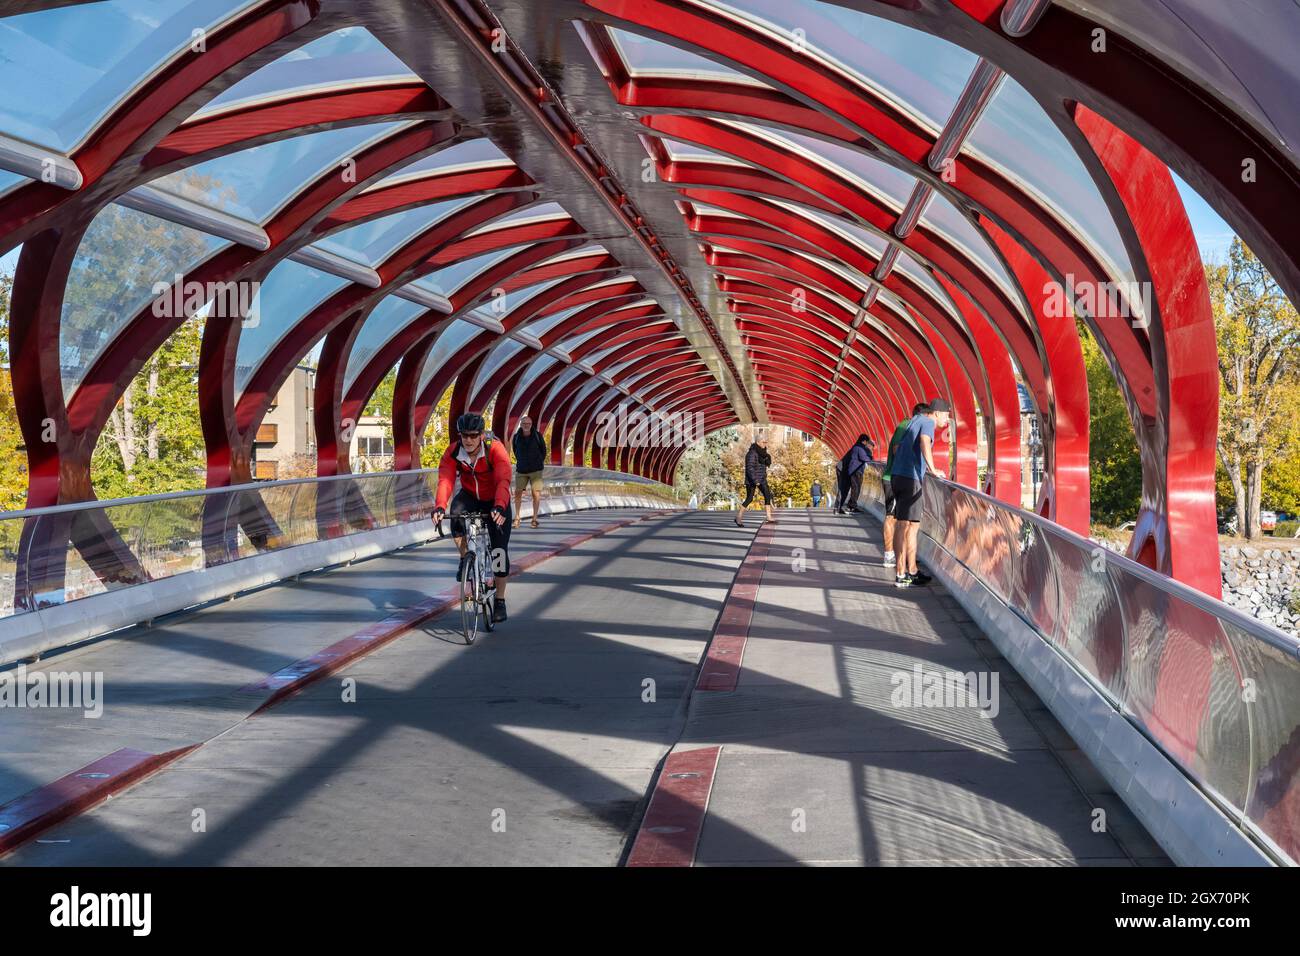 Calgary, Alberta, Canada - 27 September 2021: Inside the Peace Bridge (designed by Santiago Calatrava) in the Autumn season Stock Photo